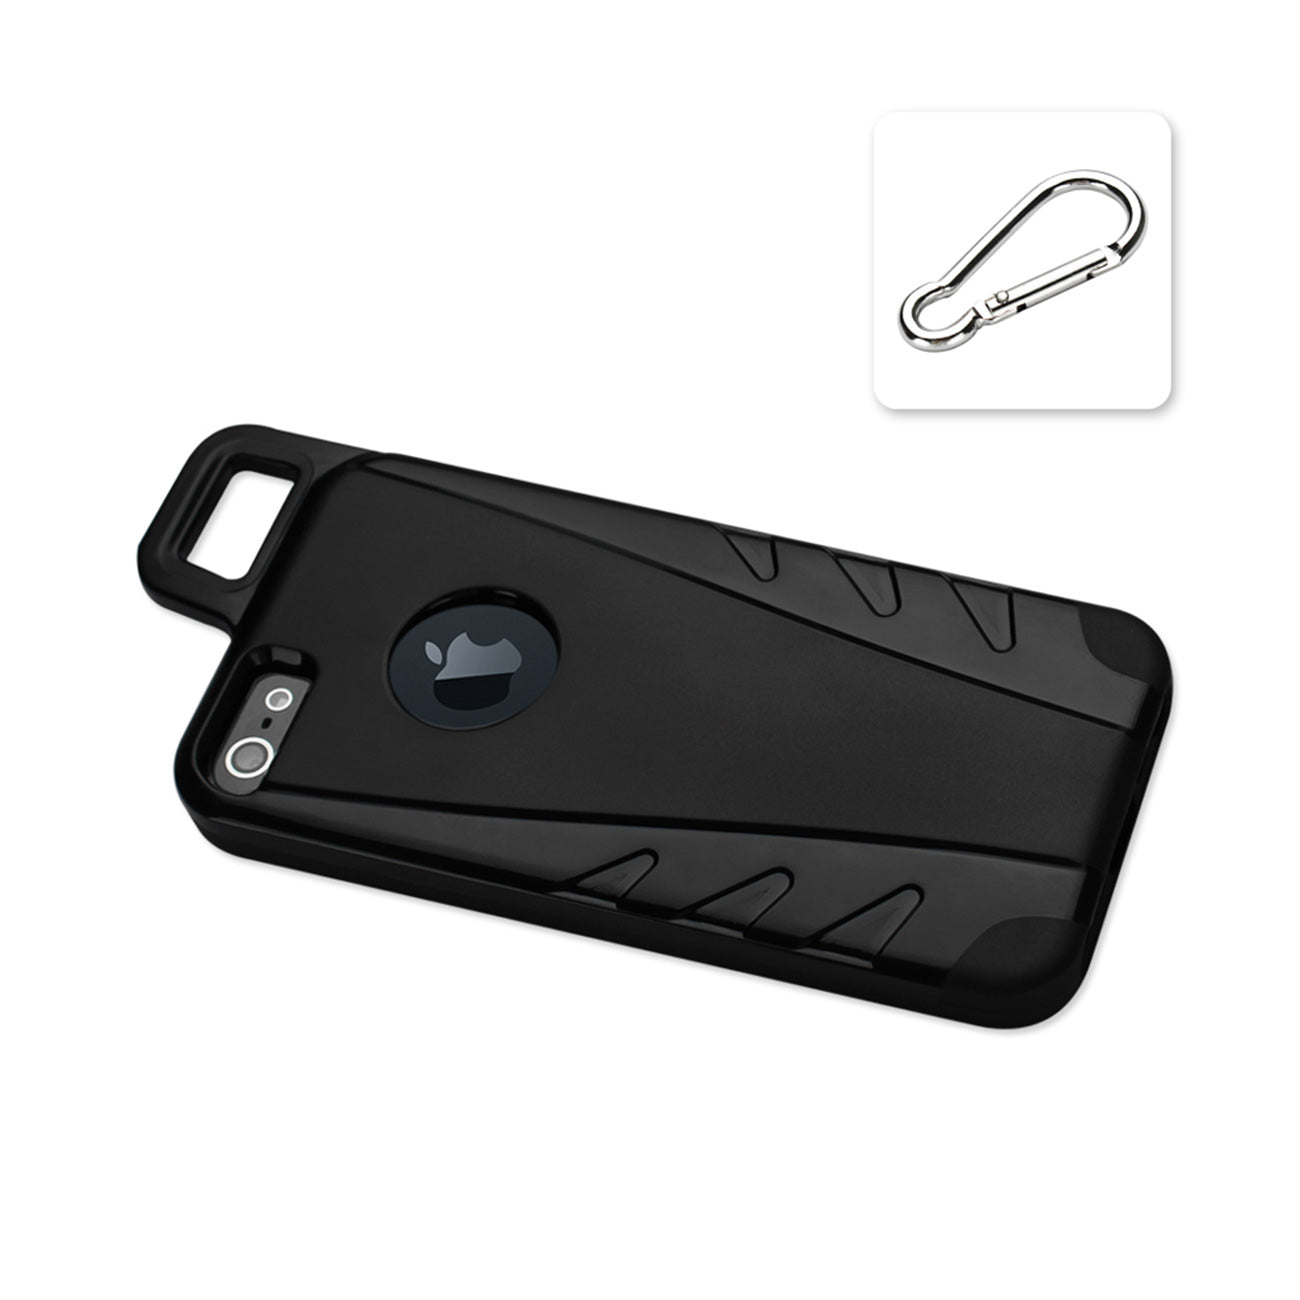 Case Hybrid Drop Proof Workout With Hook iPhone SE/ 5S/ 5 Black Color